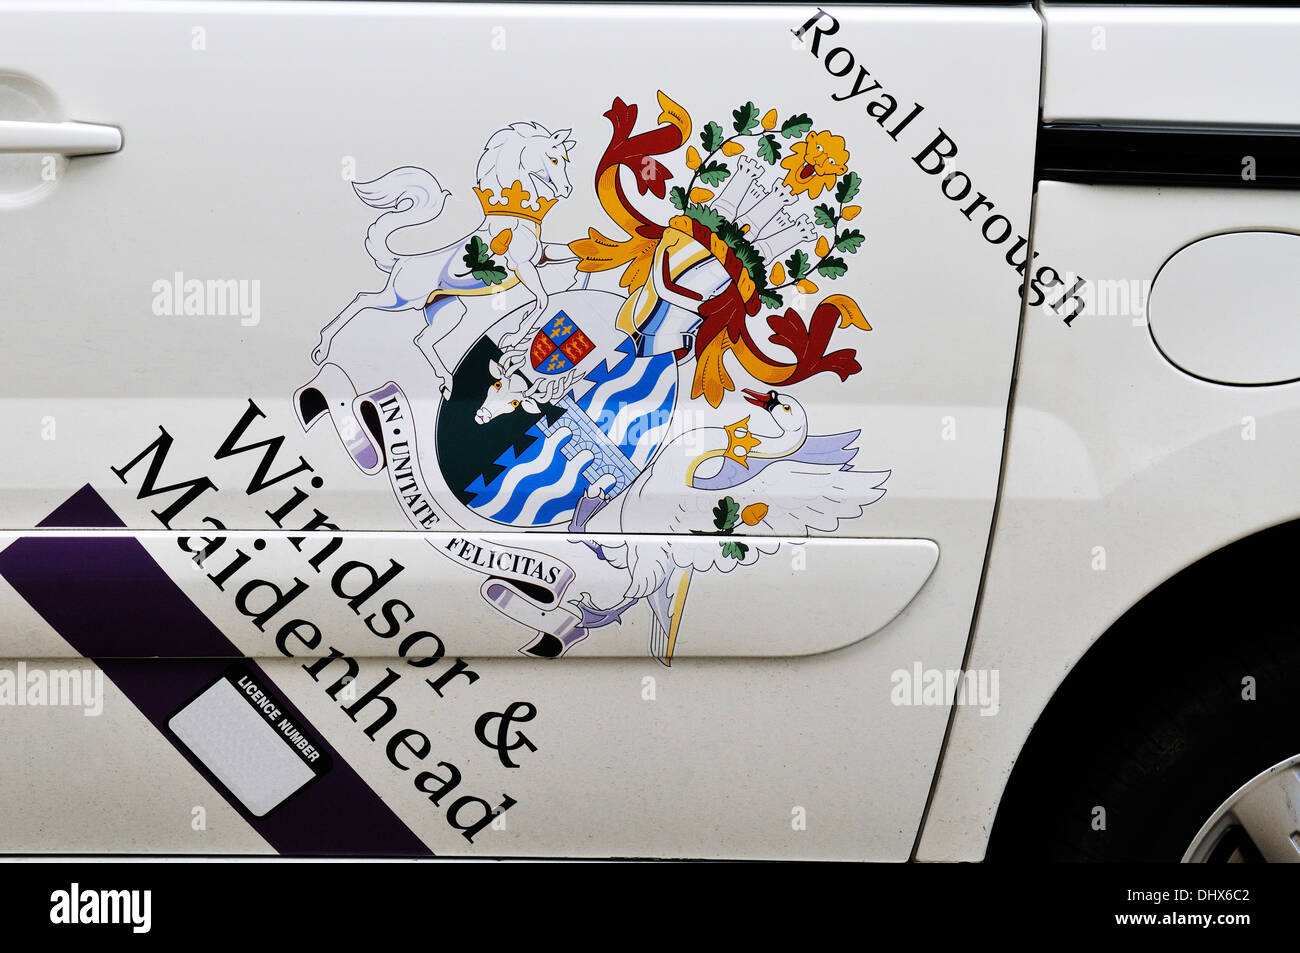 Royal Borough of Windsor & Maidenhead logo on side of taxi Stock Photo